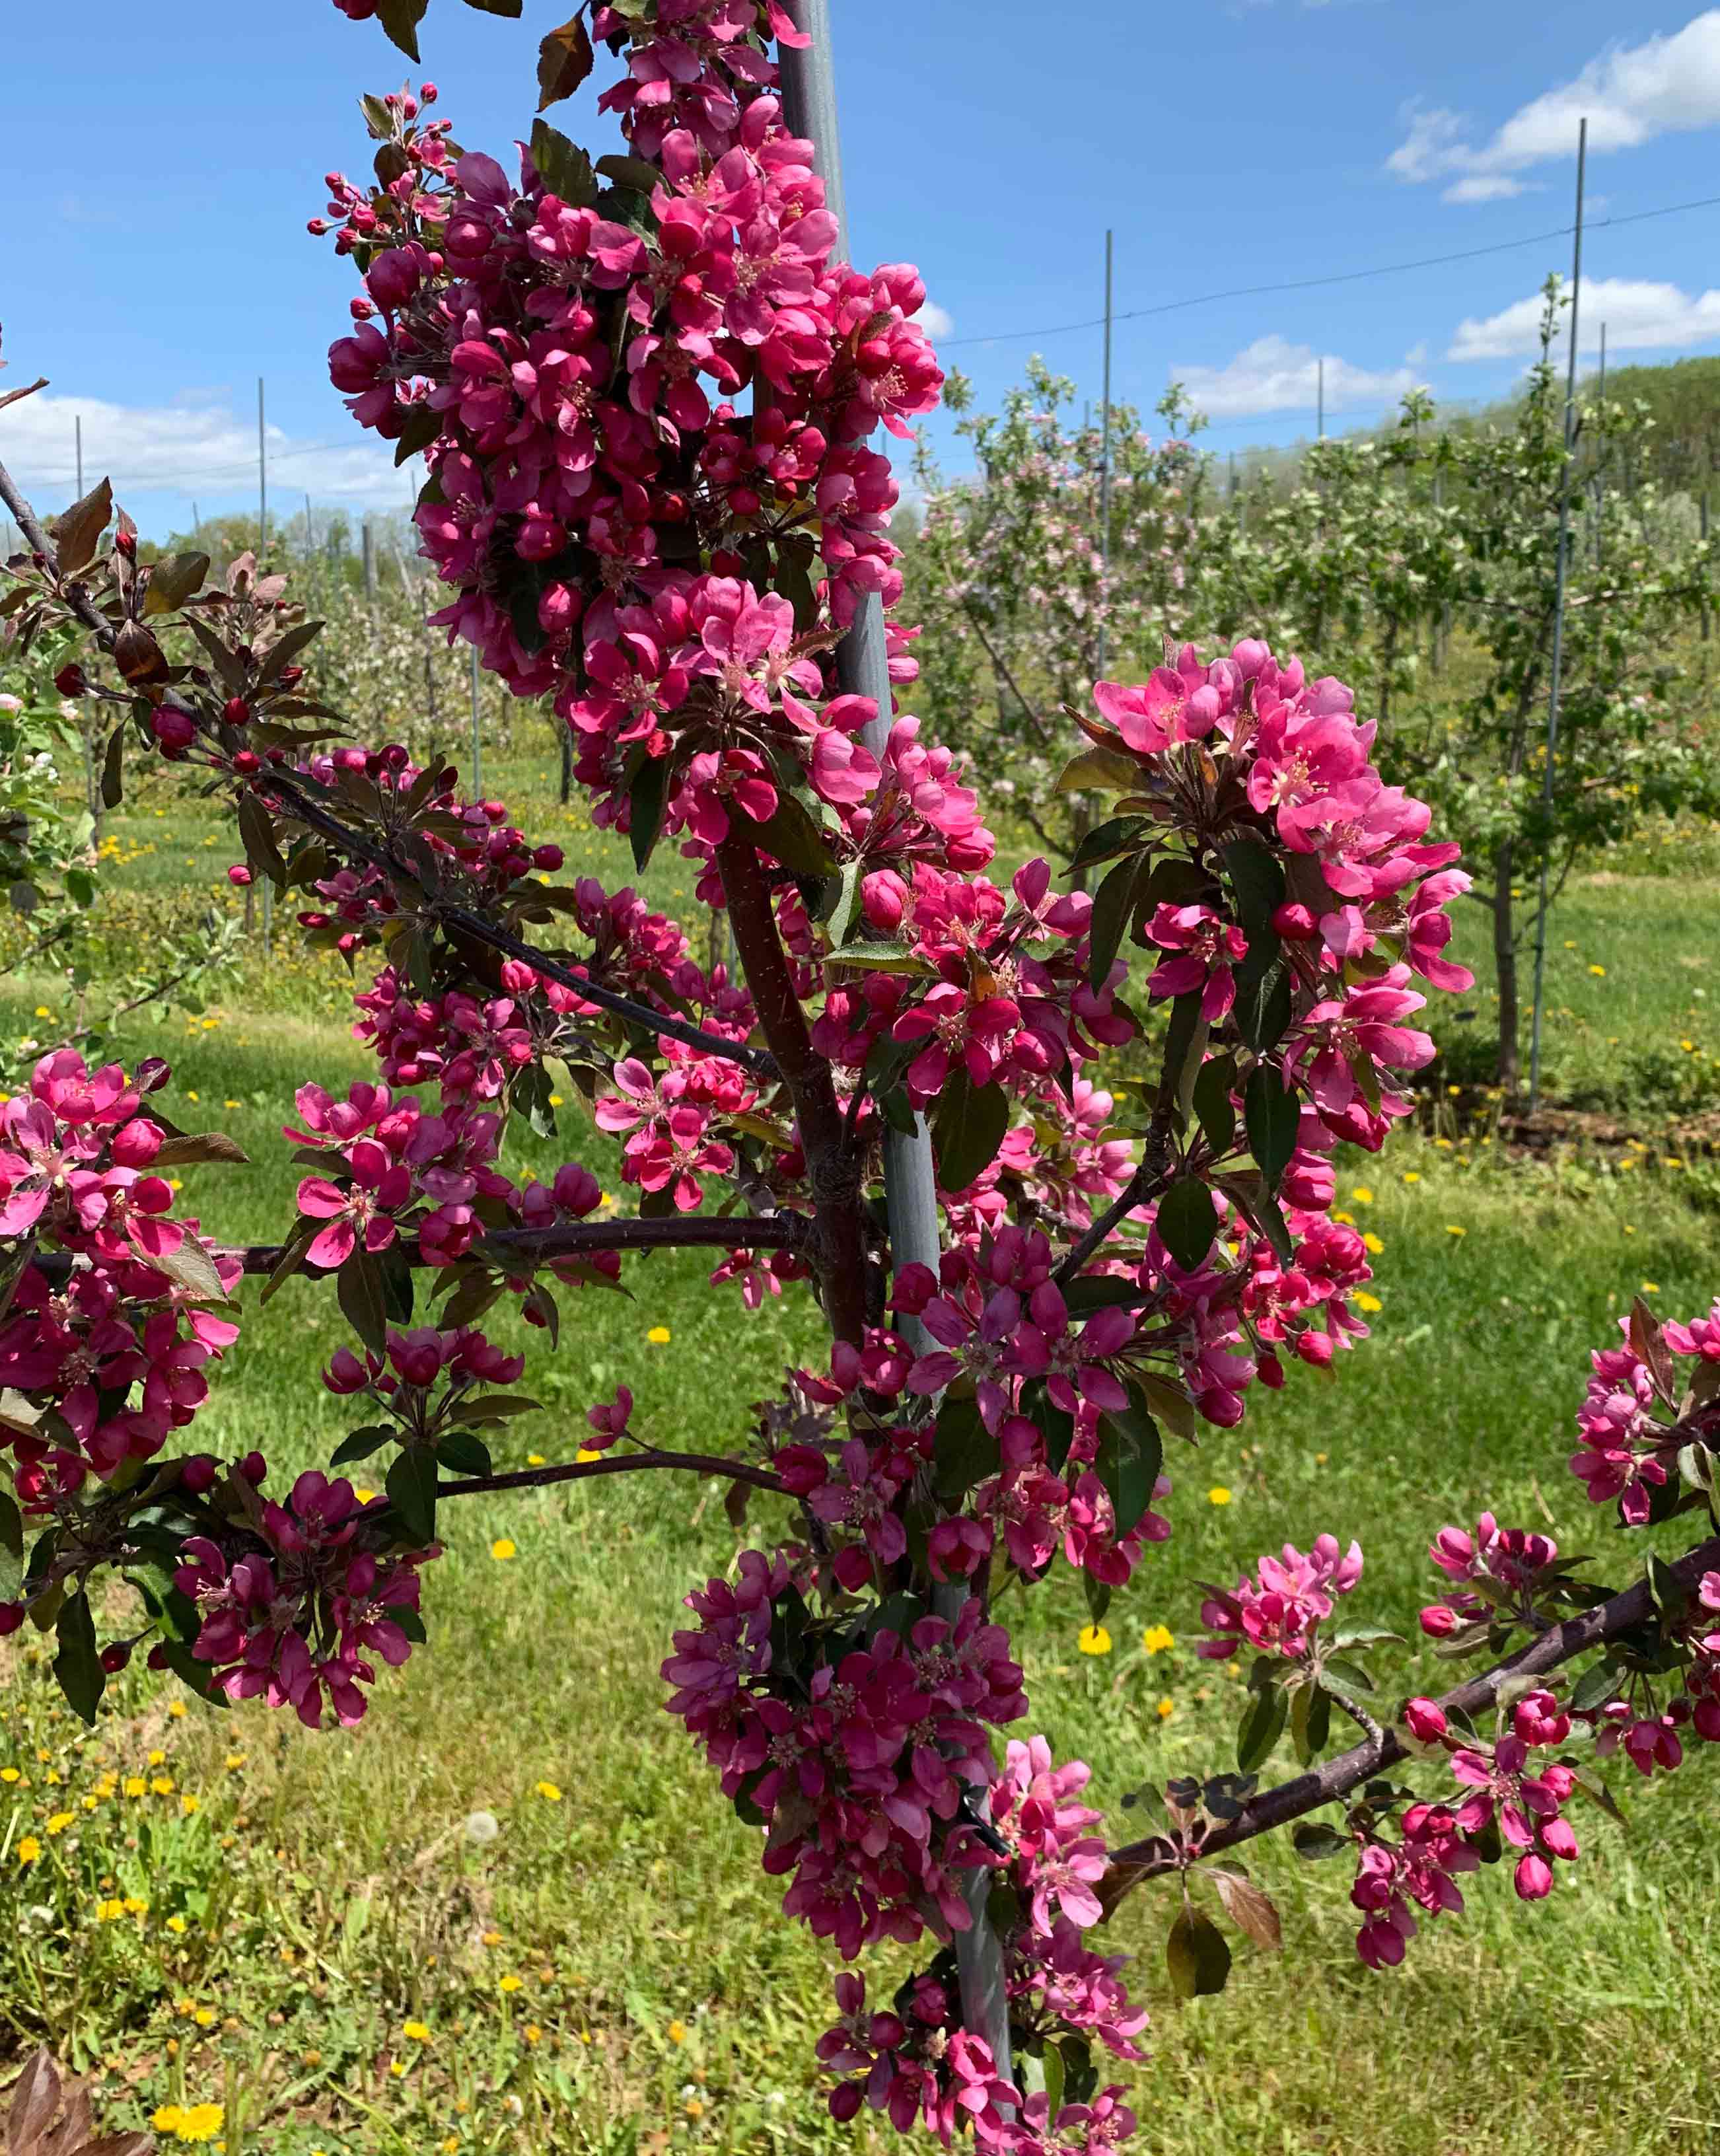 Maypole apple tree in bloom